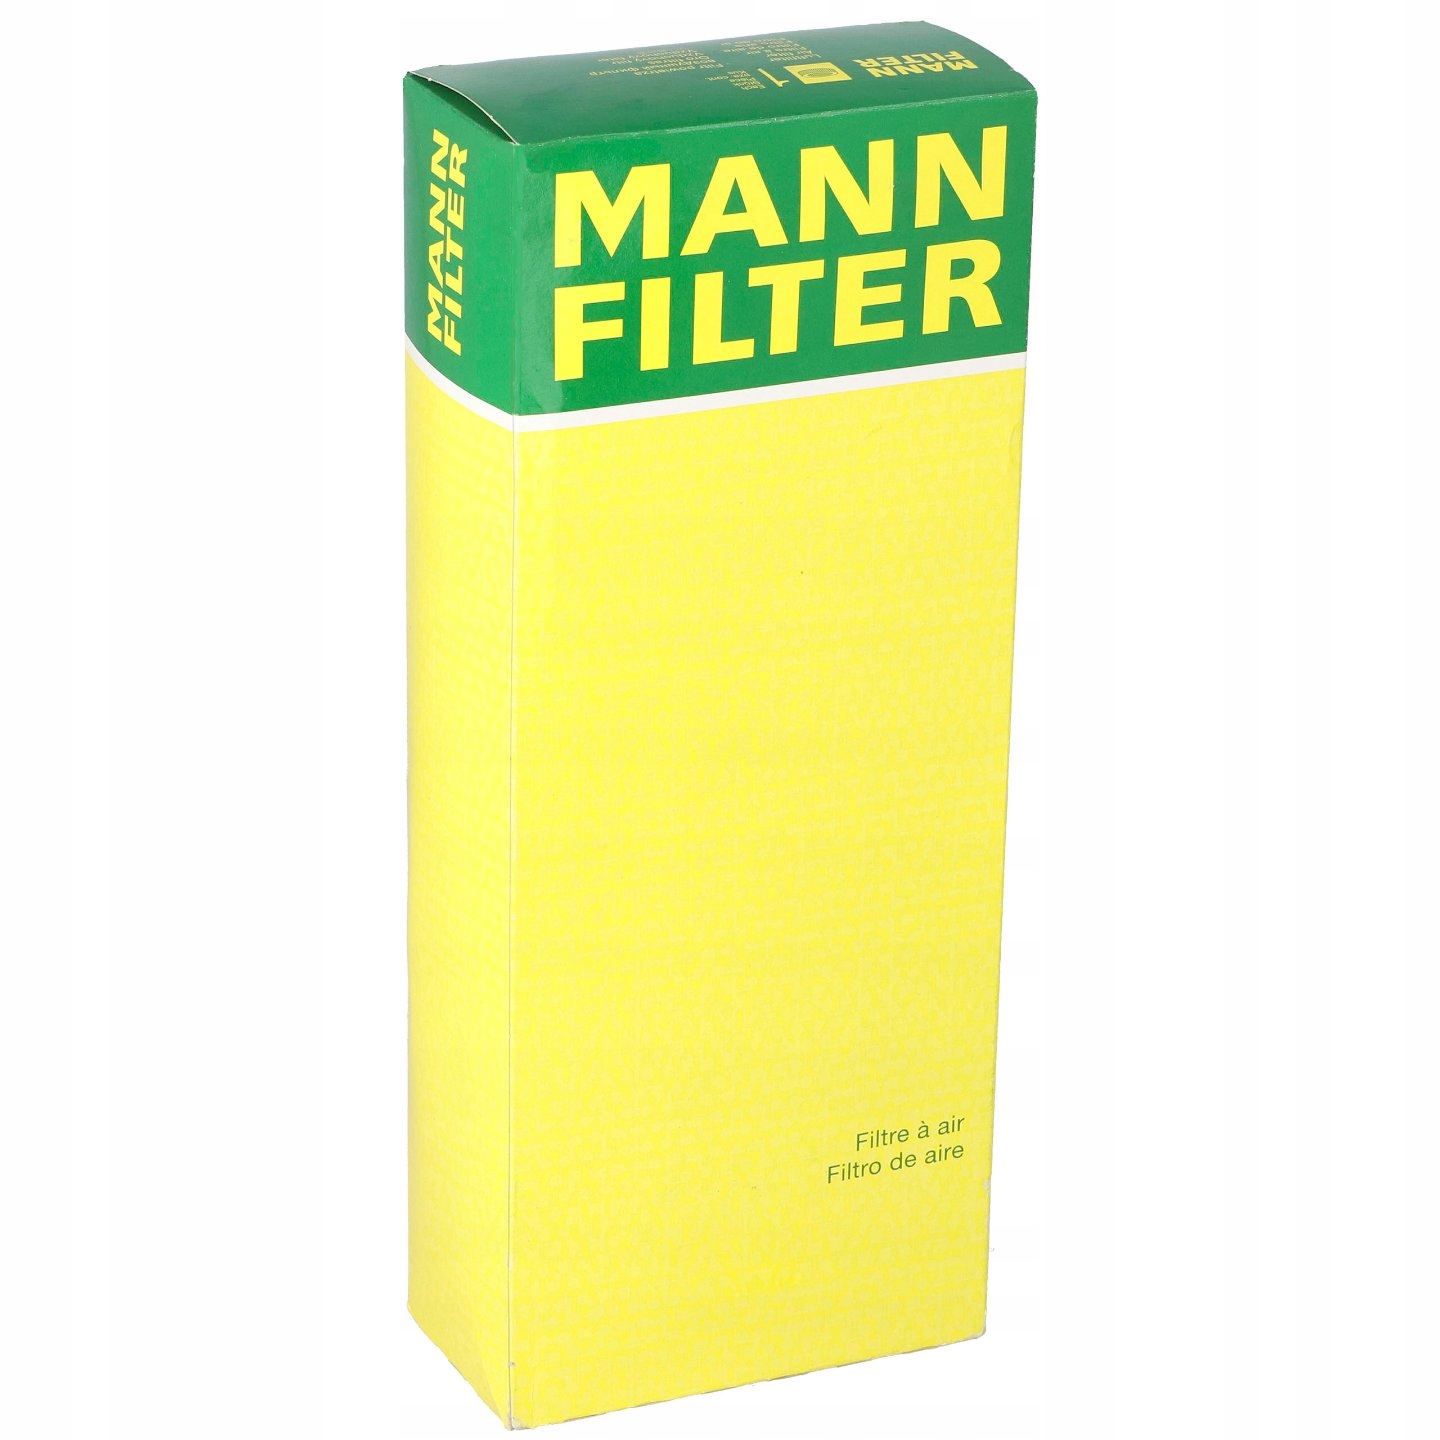 VZDUCHOVÝ FILTER MANN-FILTER